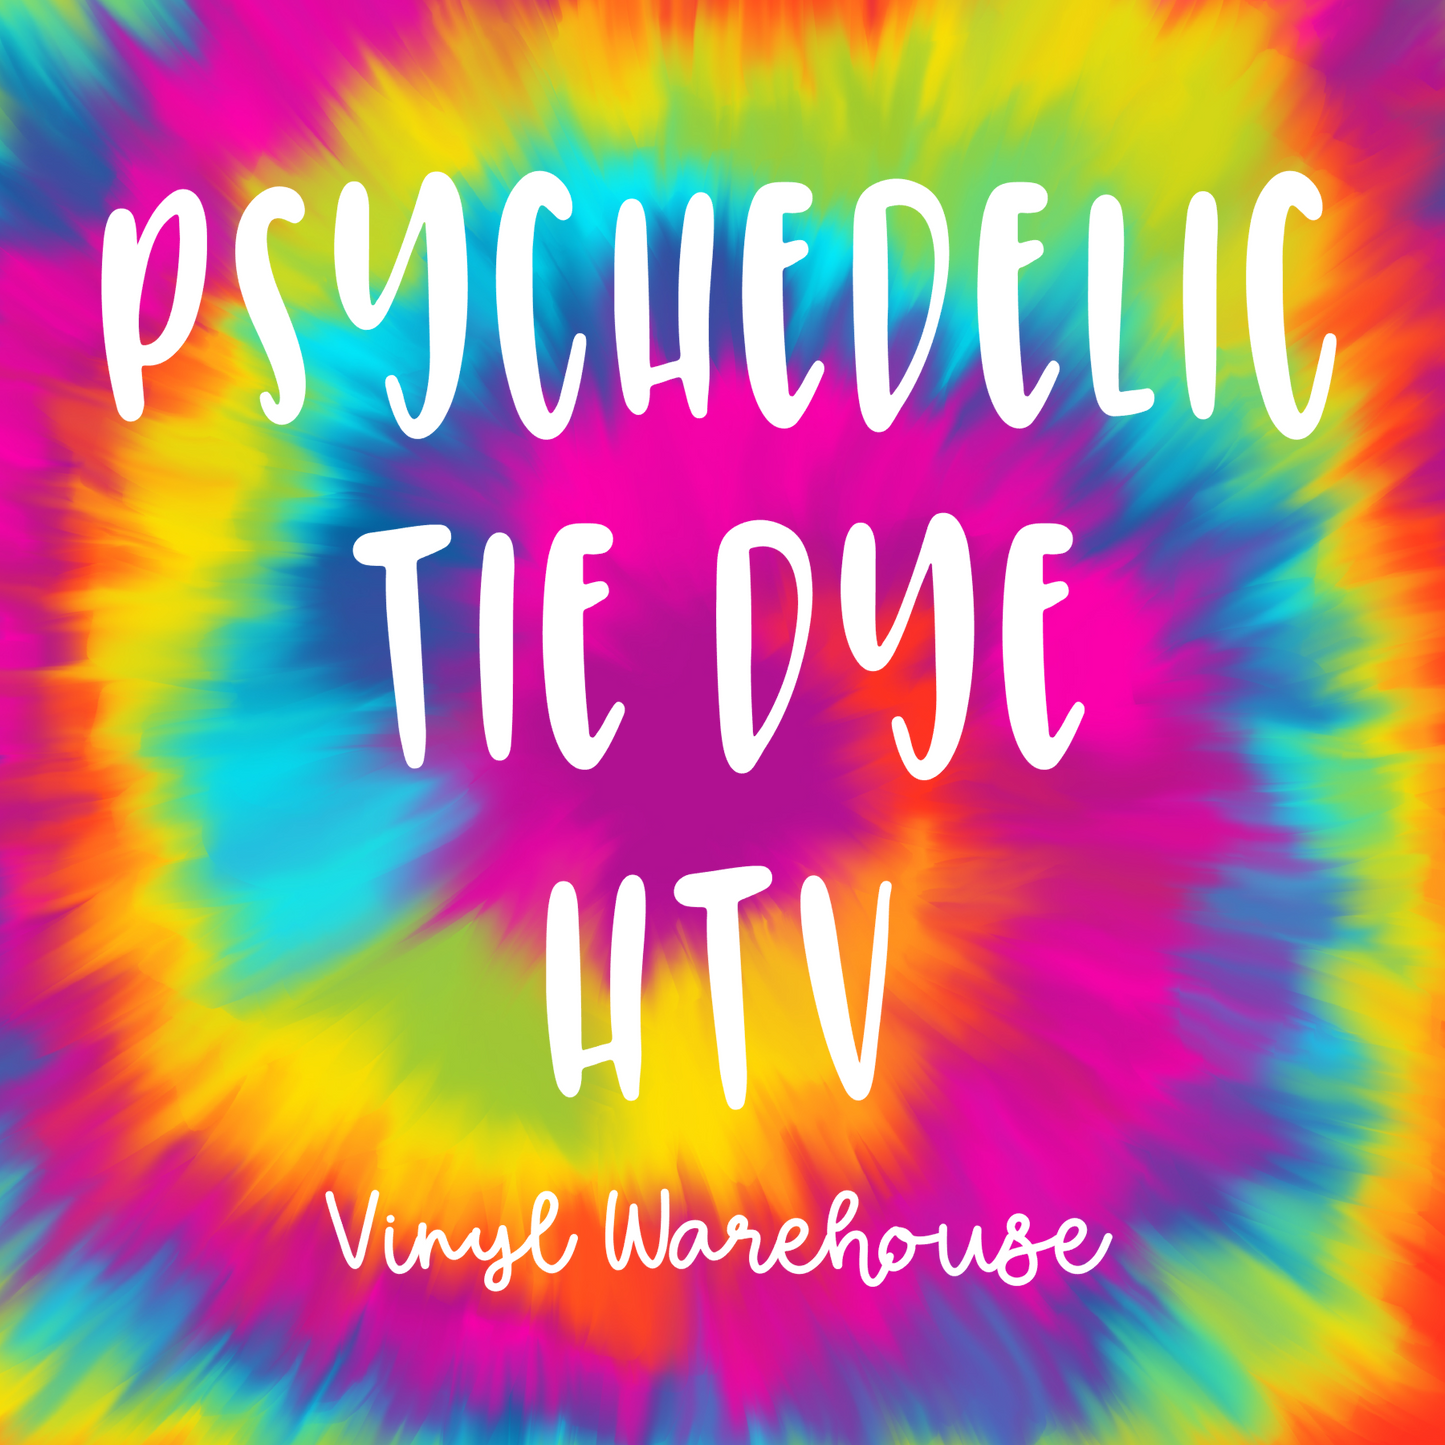 Psychedelic Tie Dye HTV